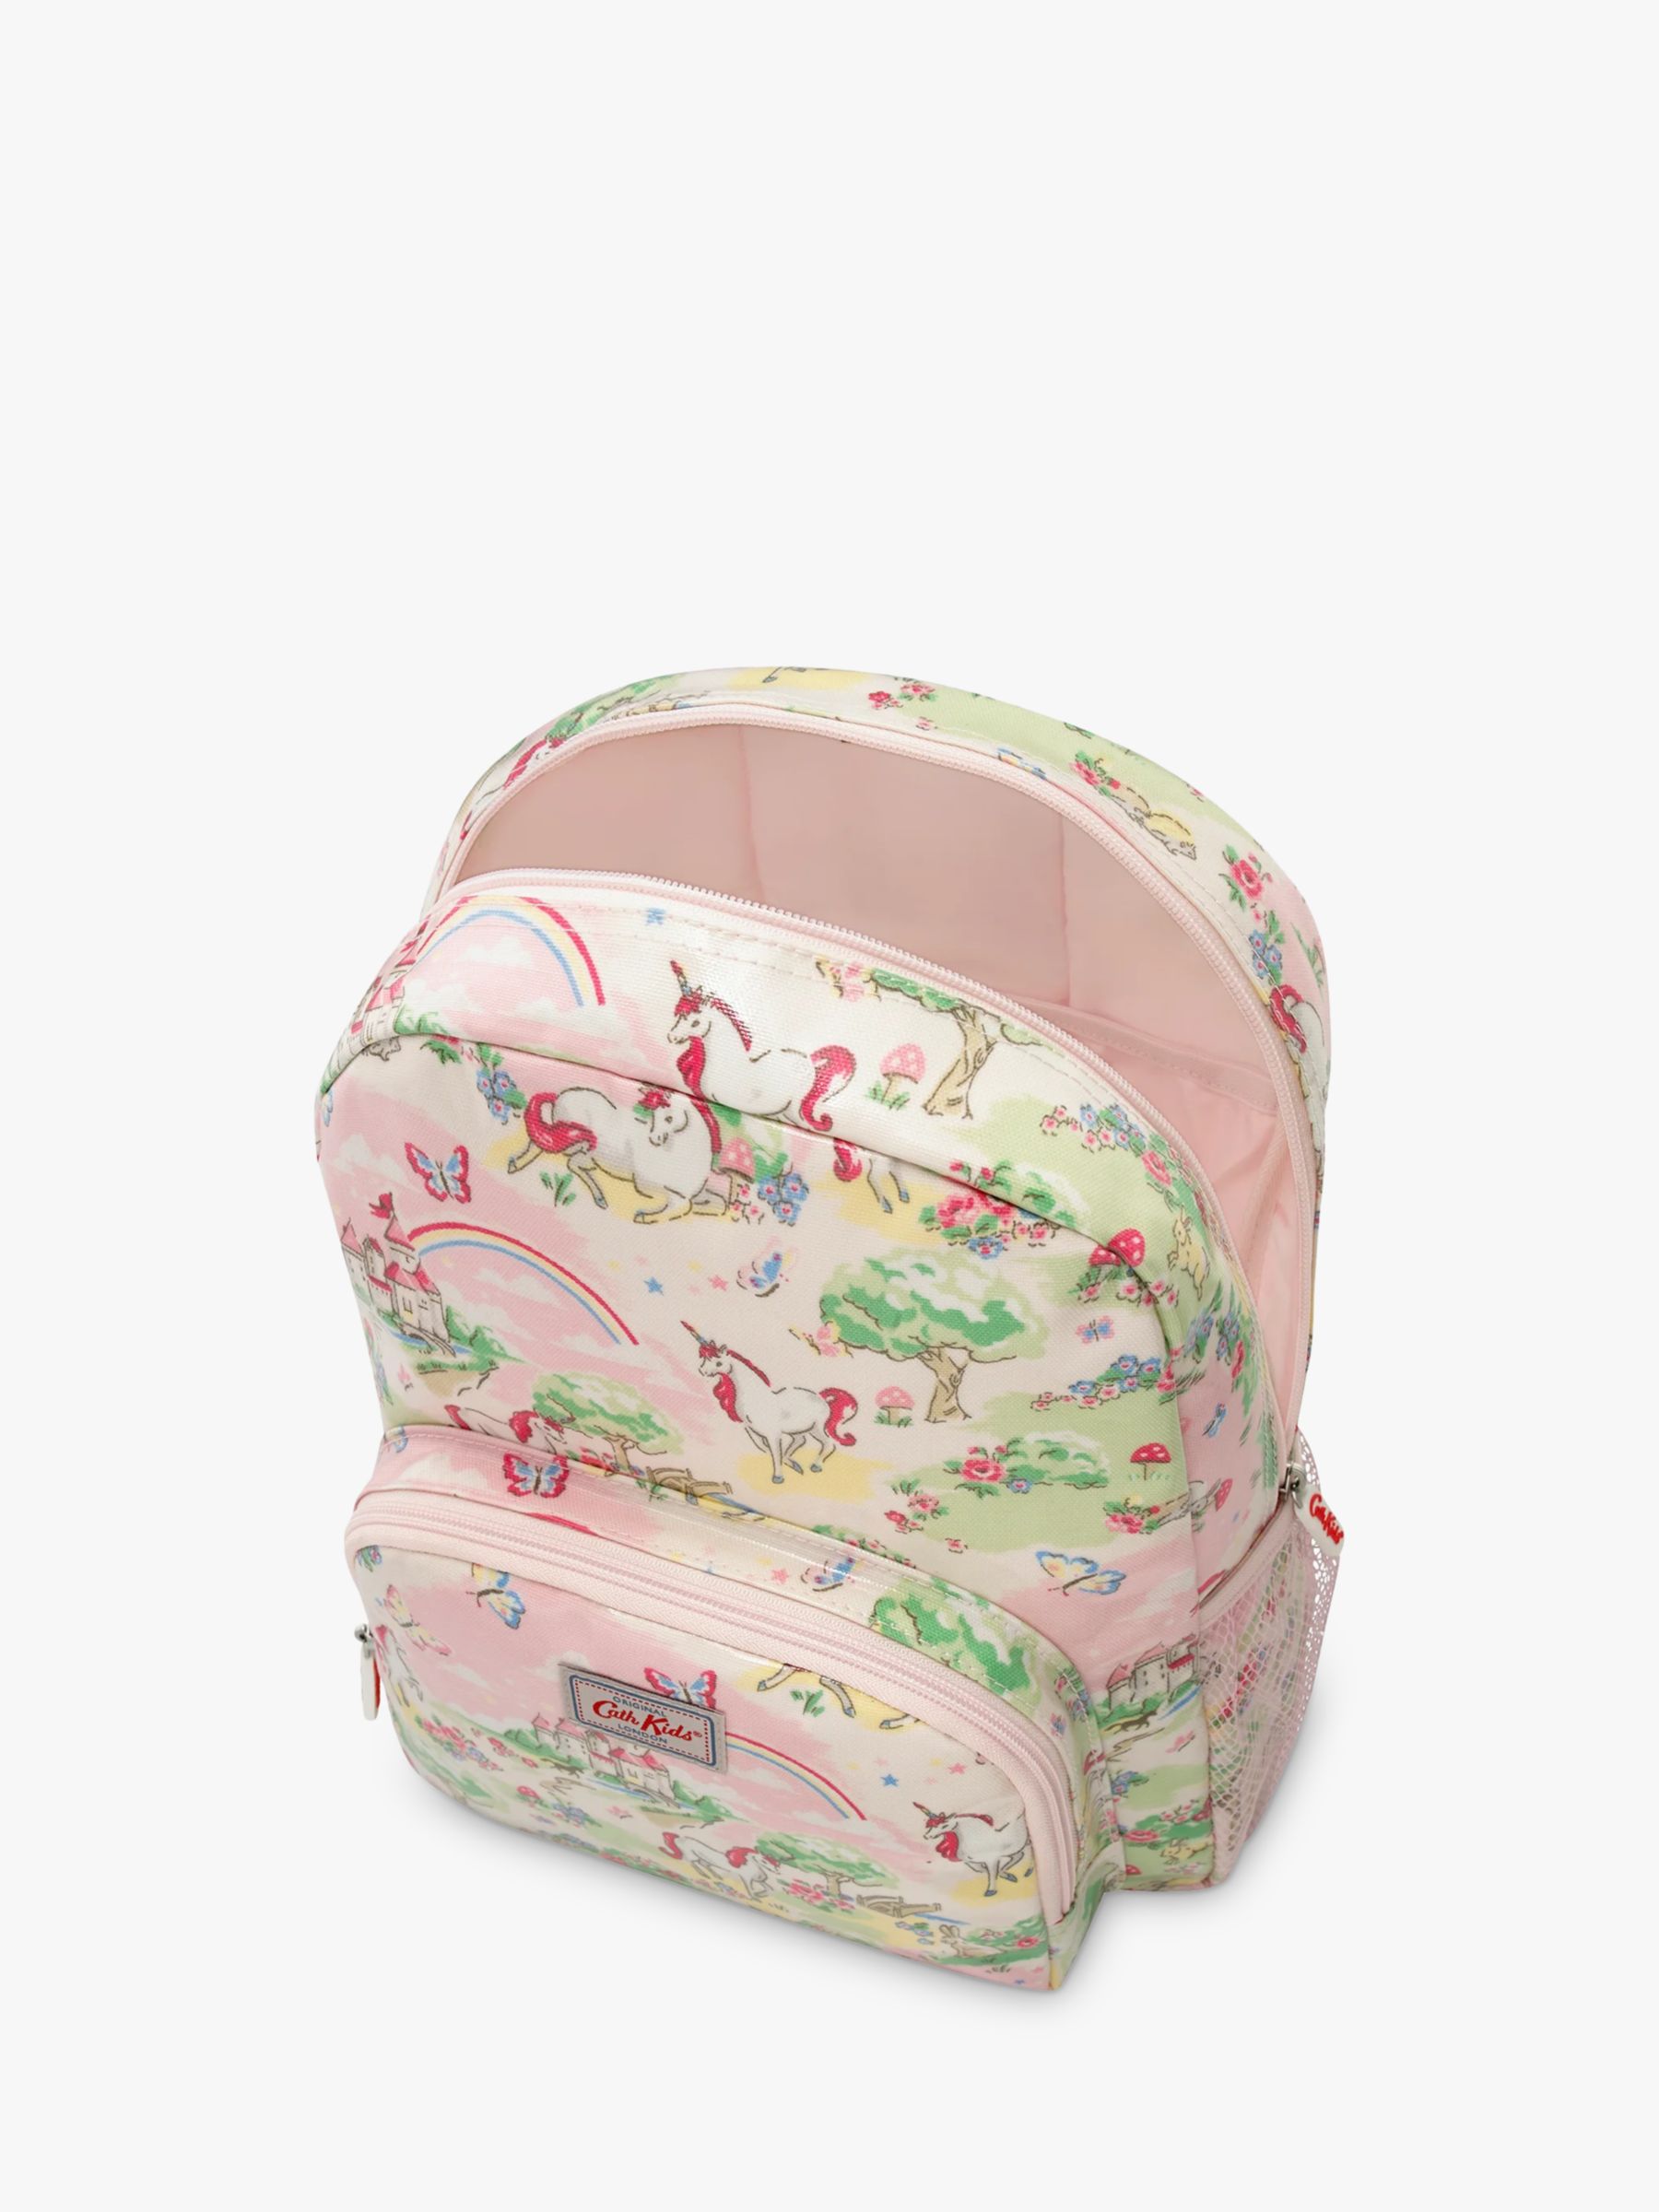 Cath Kidston Kids' Unicorn Large Backpack, Pink